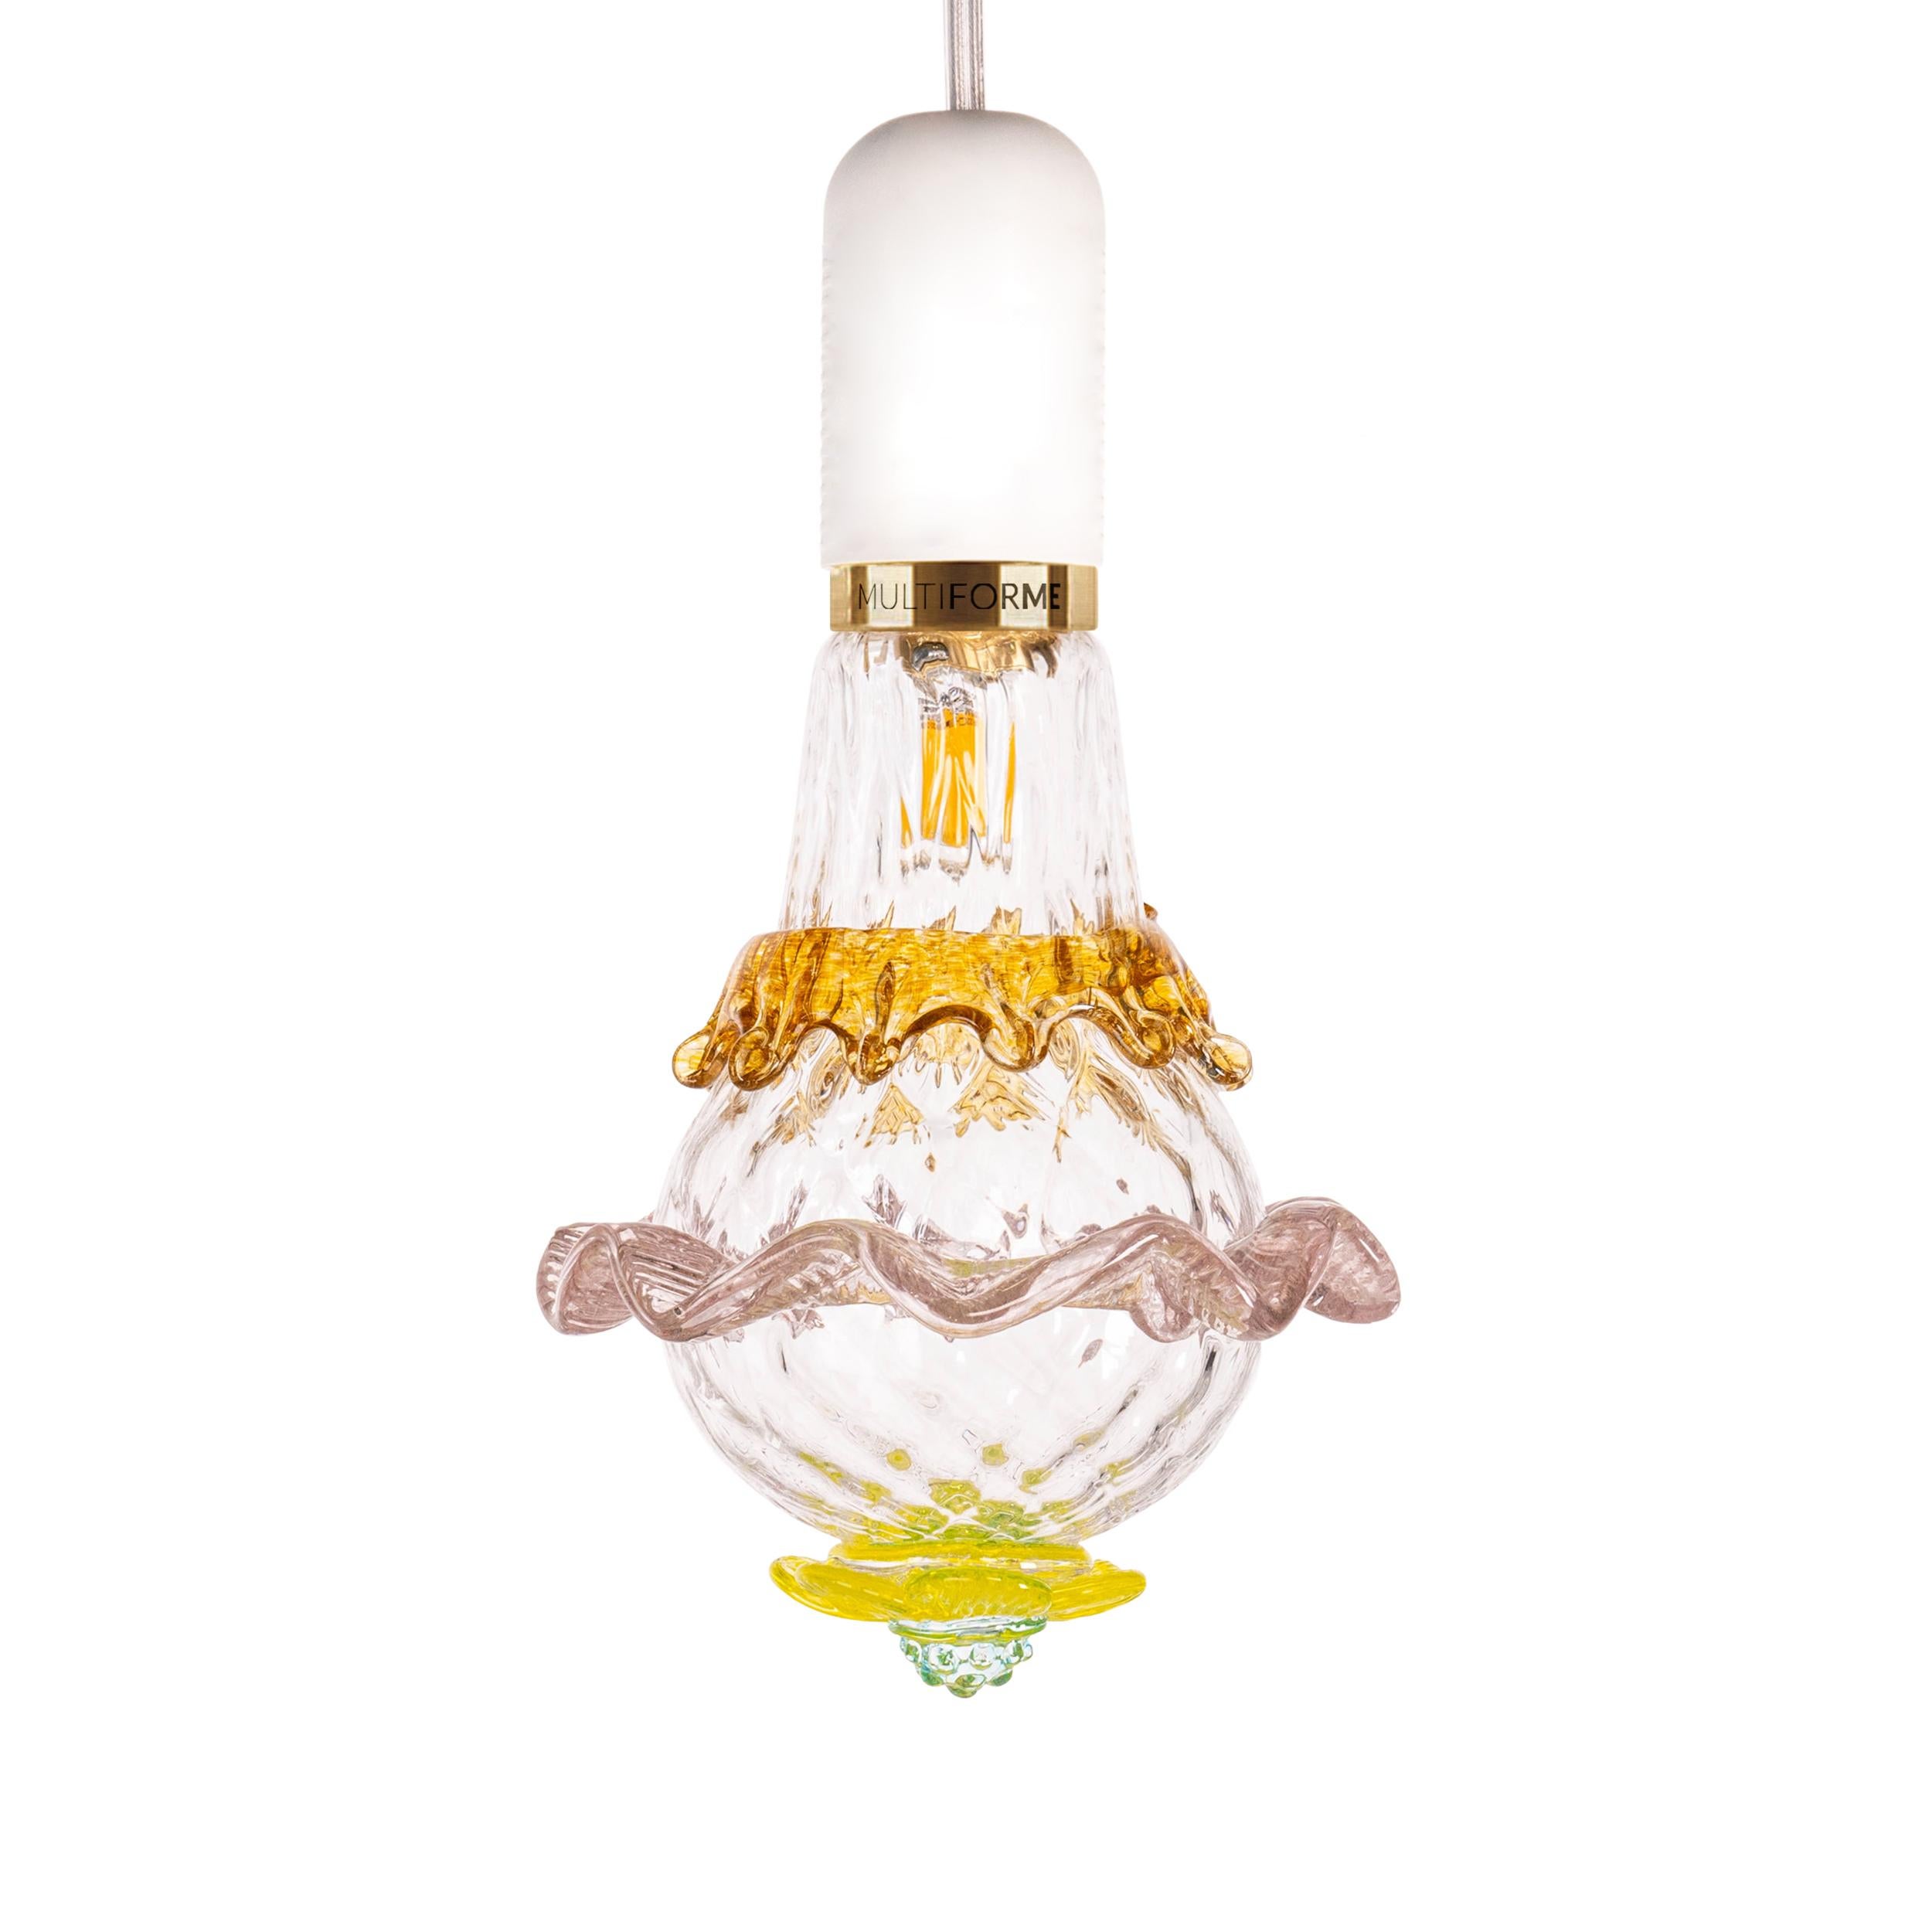 Italian Artistic glass lightbulb chandelier Murano Bulb Marcantonio X Multiforme #02 For Sale